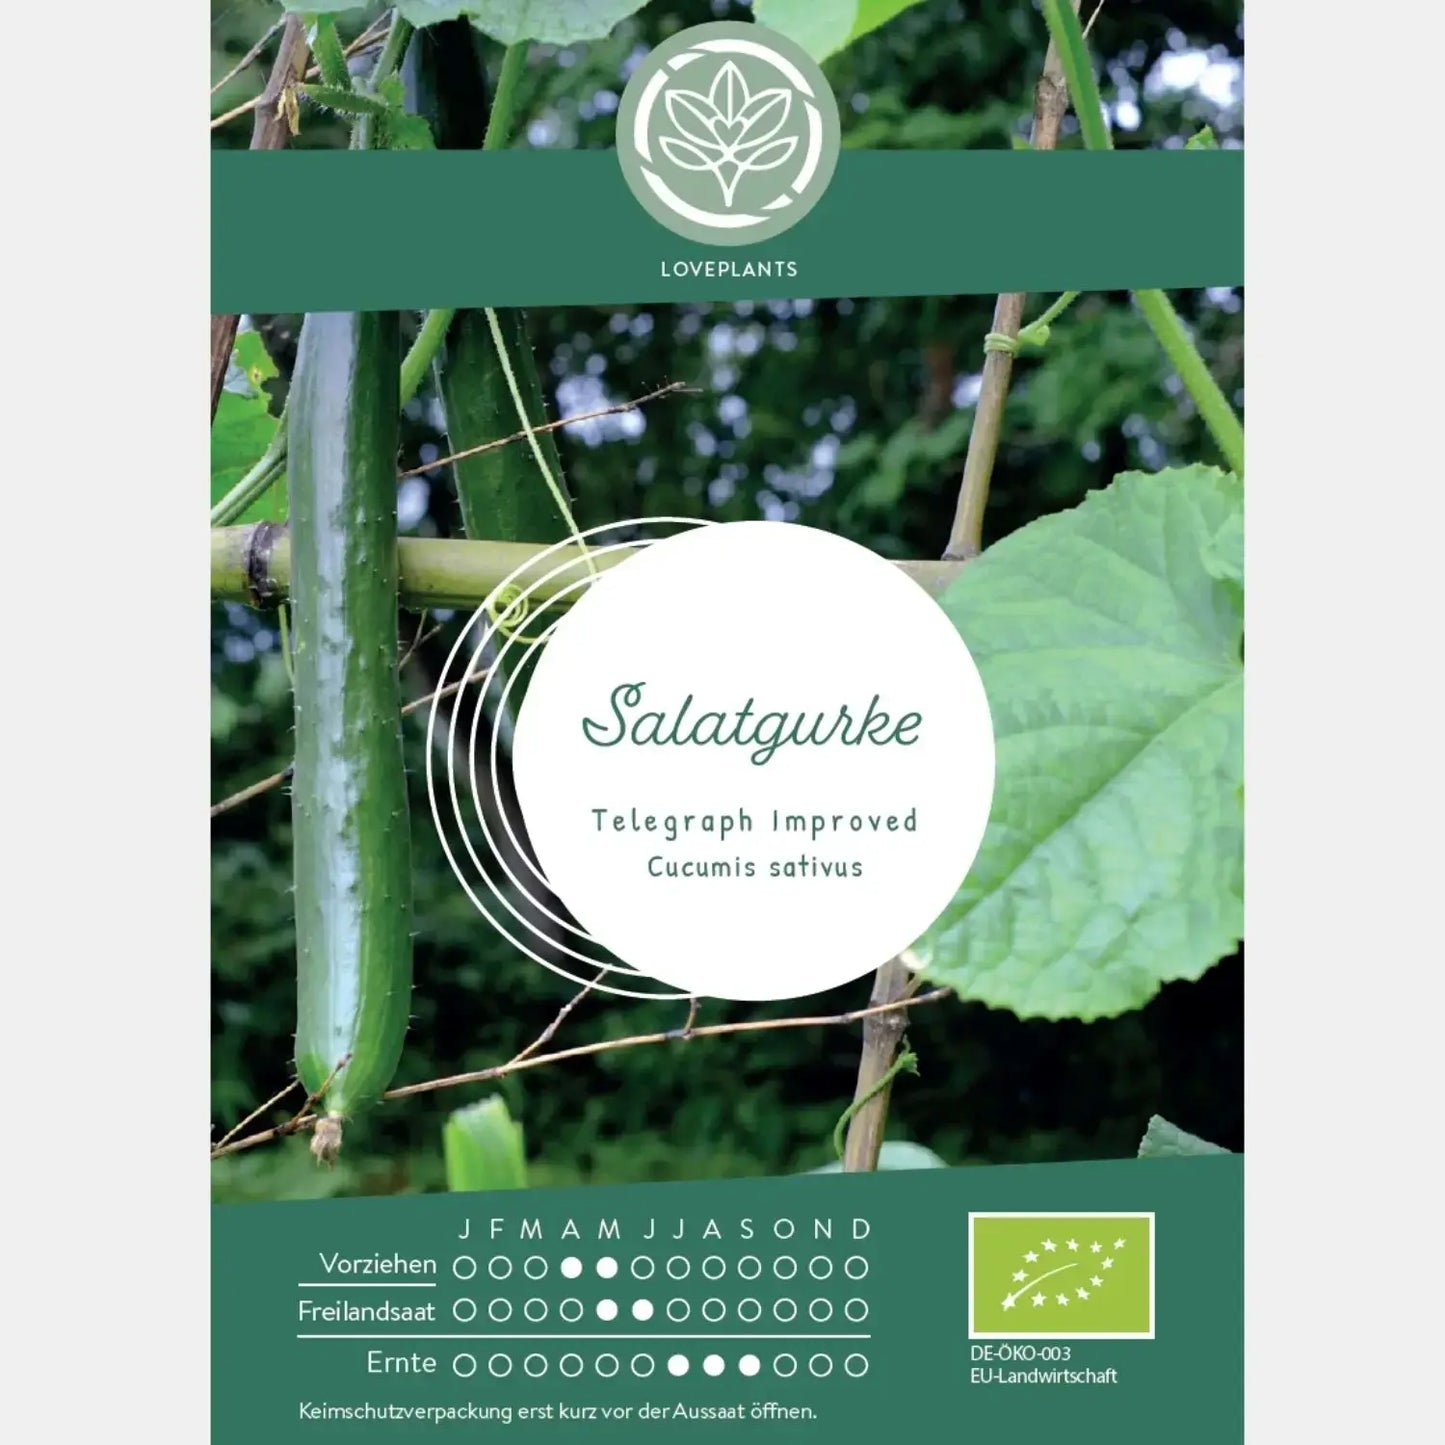 Bio Salatgurke Telegraph Improved Samen kaufen